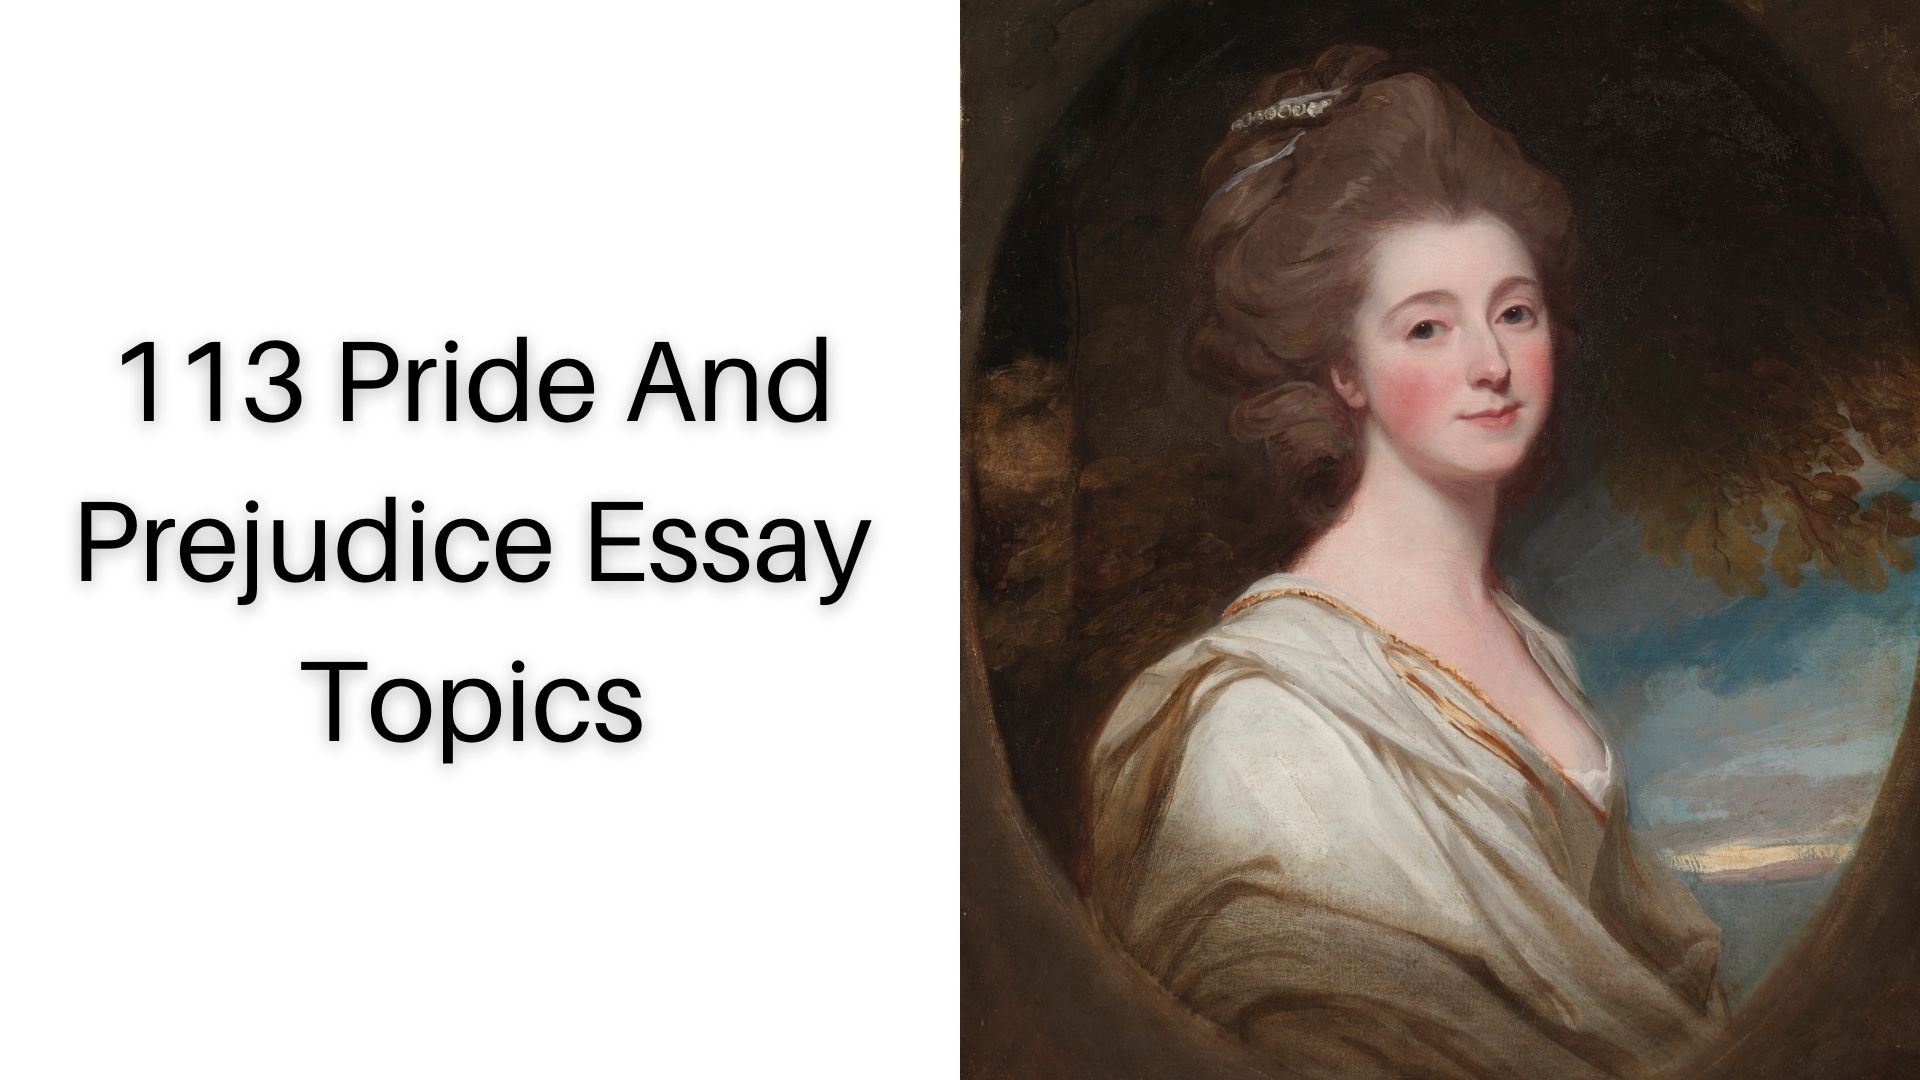 Pride And Prejudice Essay Topics